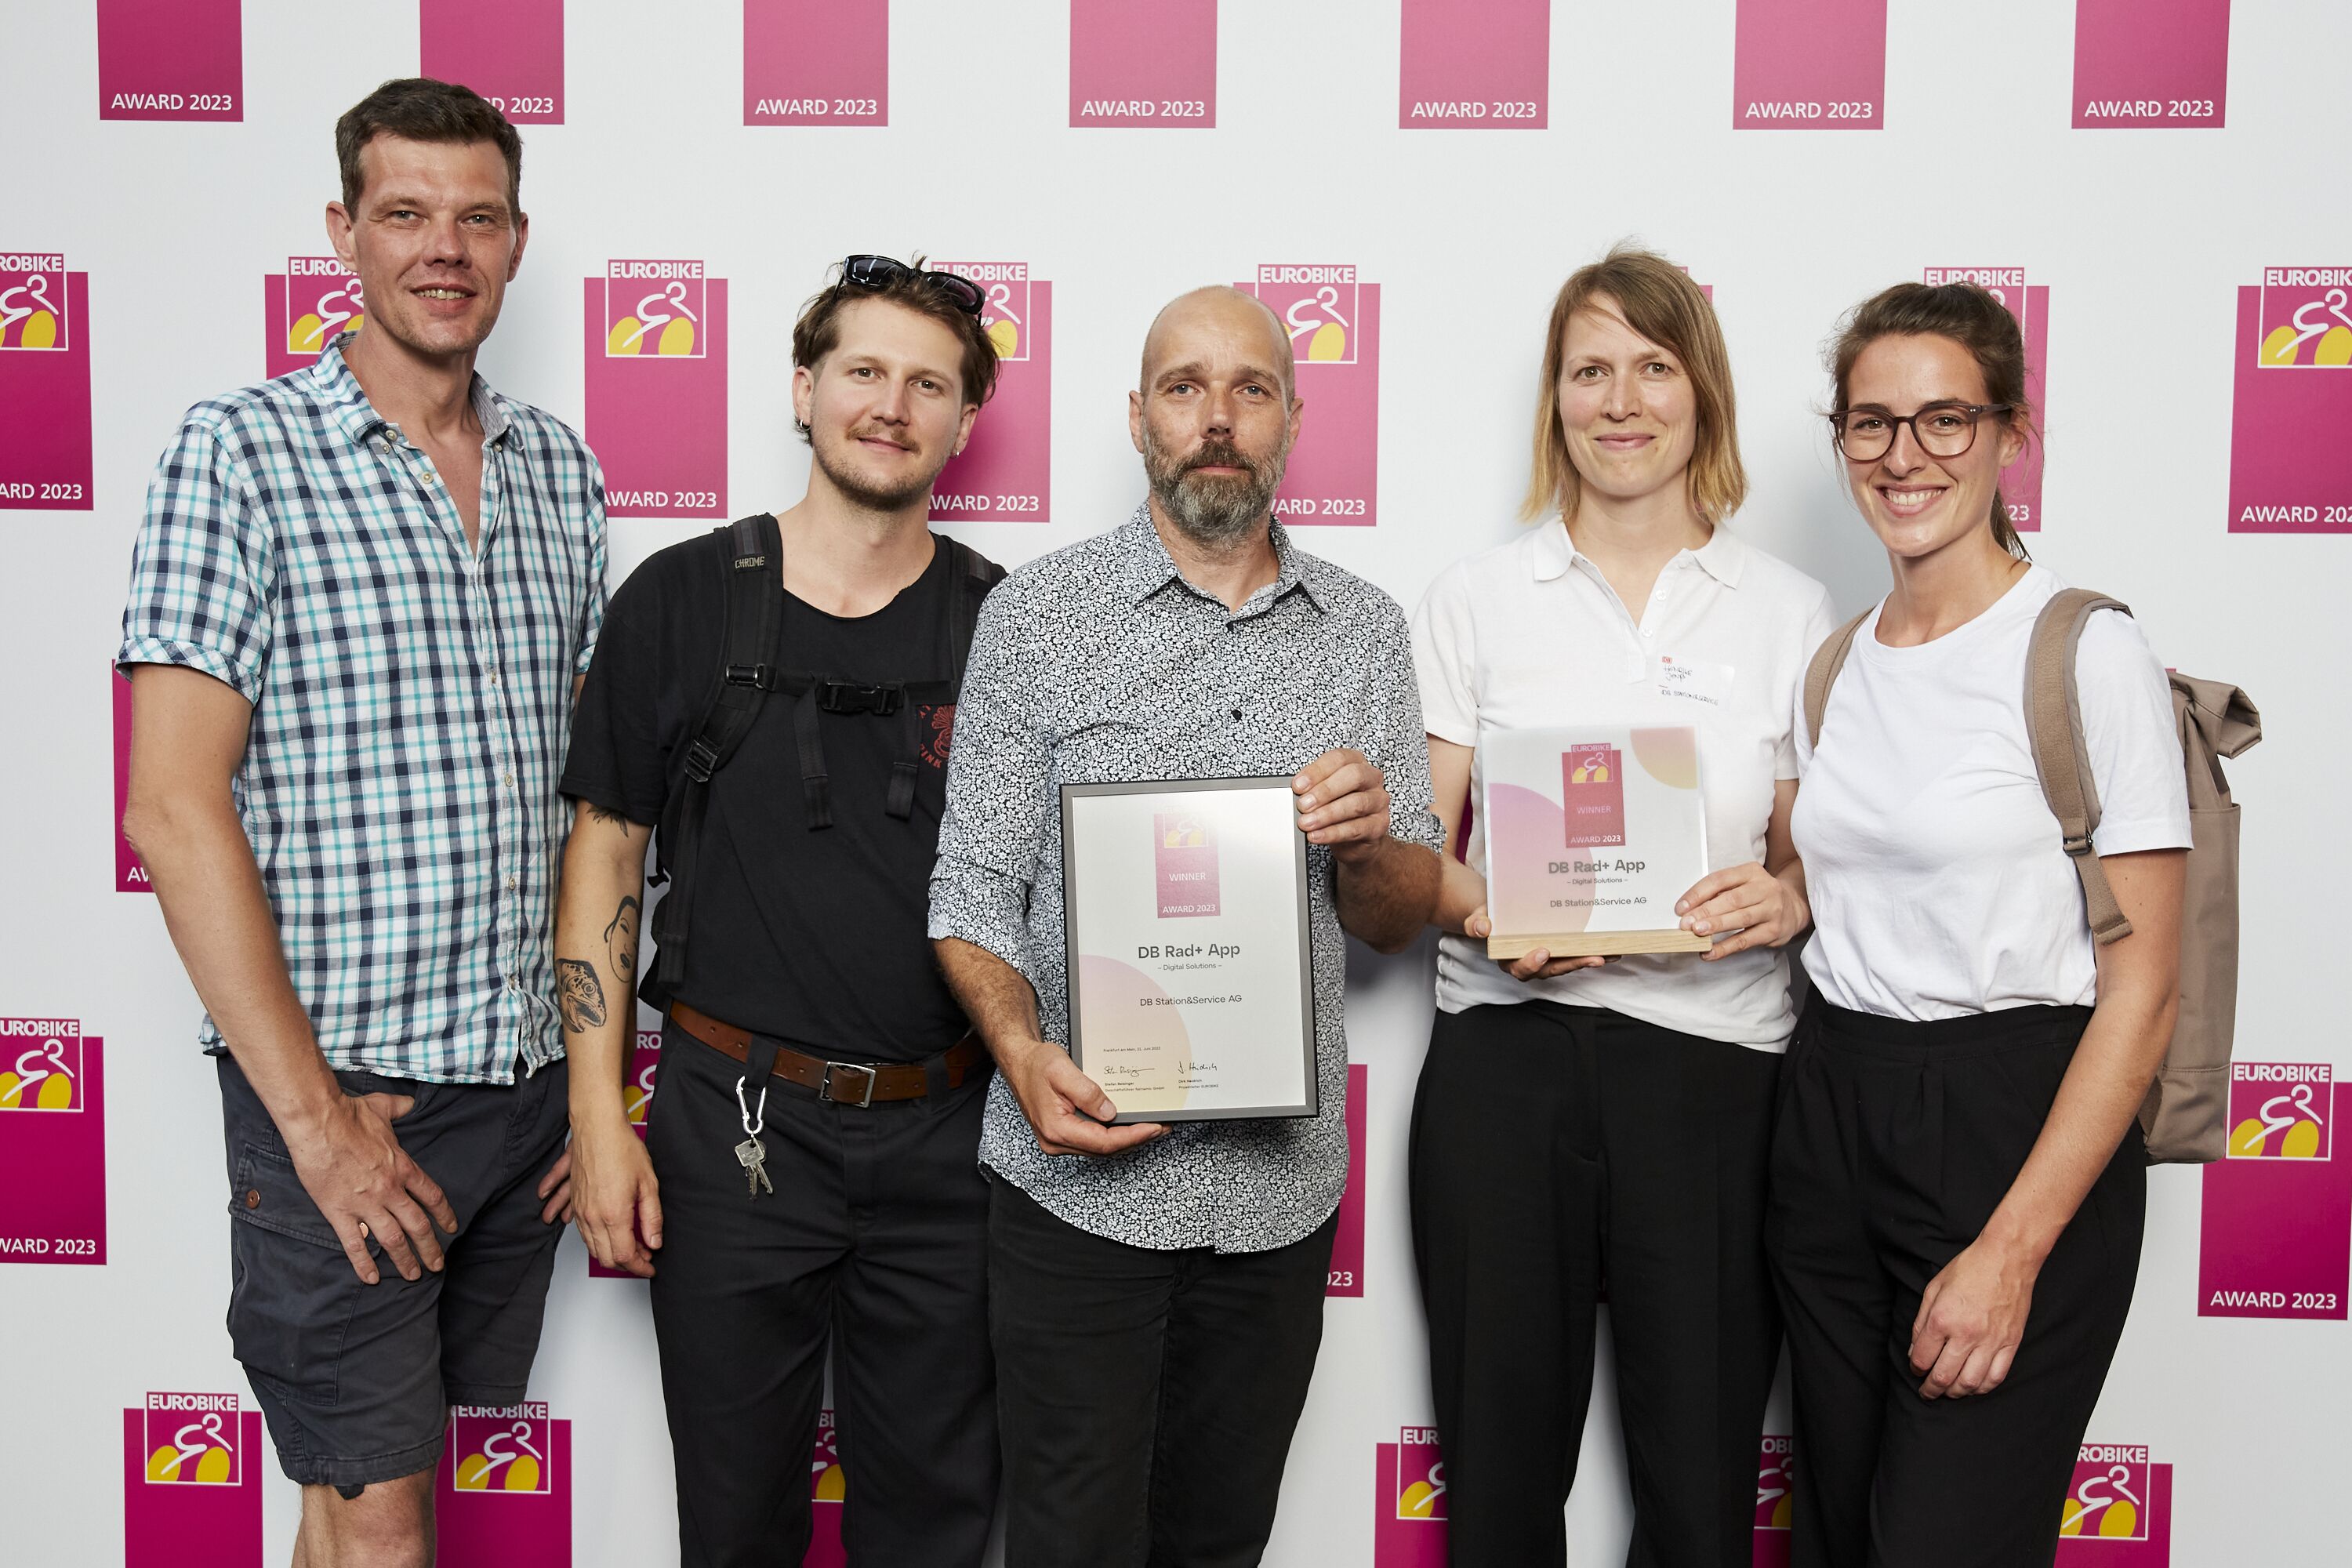 Gewinner Award: DB Station&Service; DB Rad+App